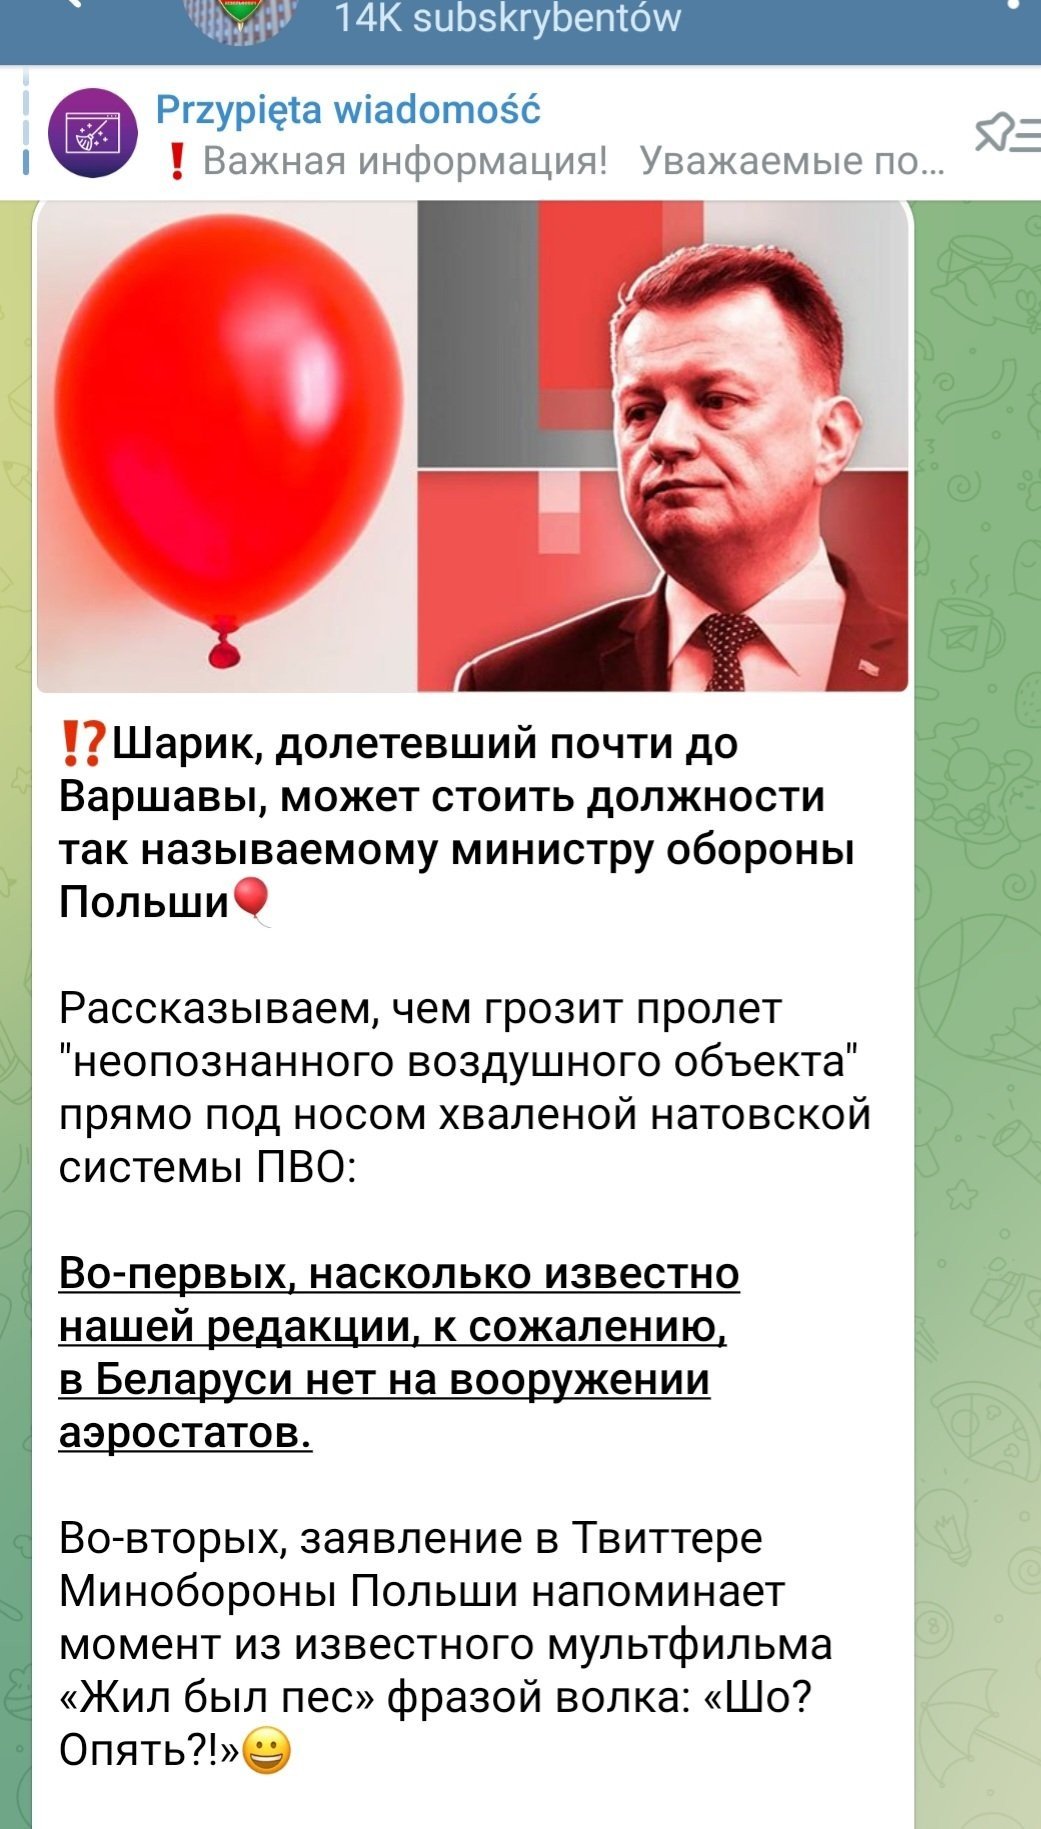 balon białoruski propaganda Błaszczak